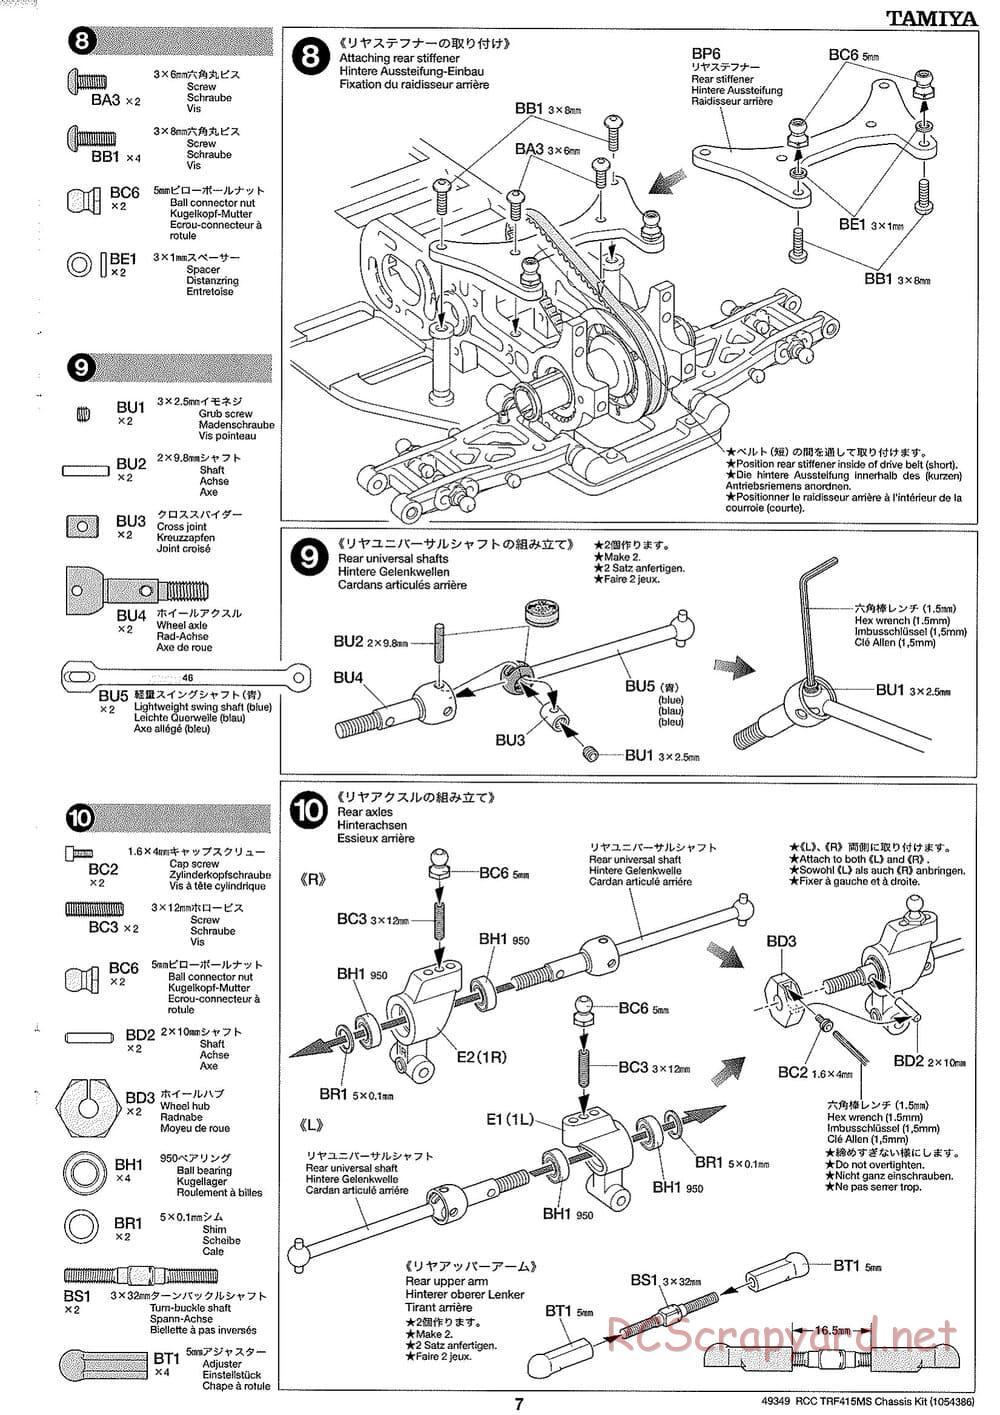 Tamiya - TRF415-MS Chassis - Manual - Page 7